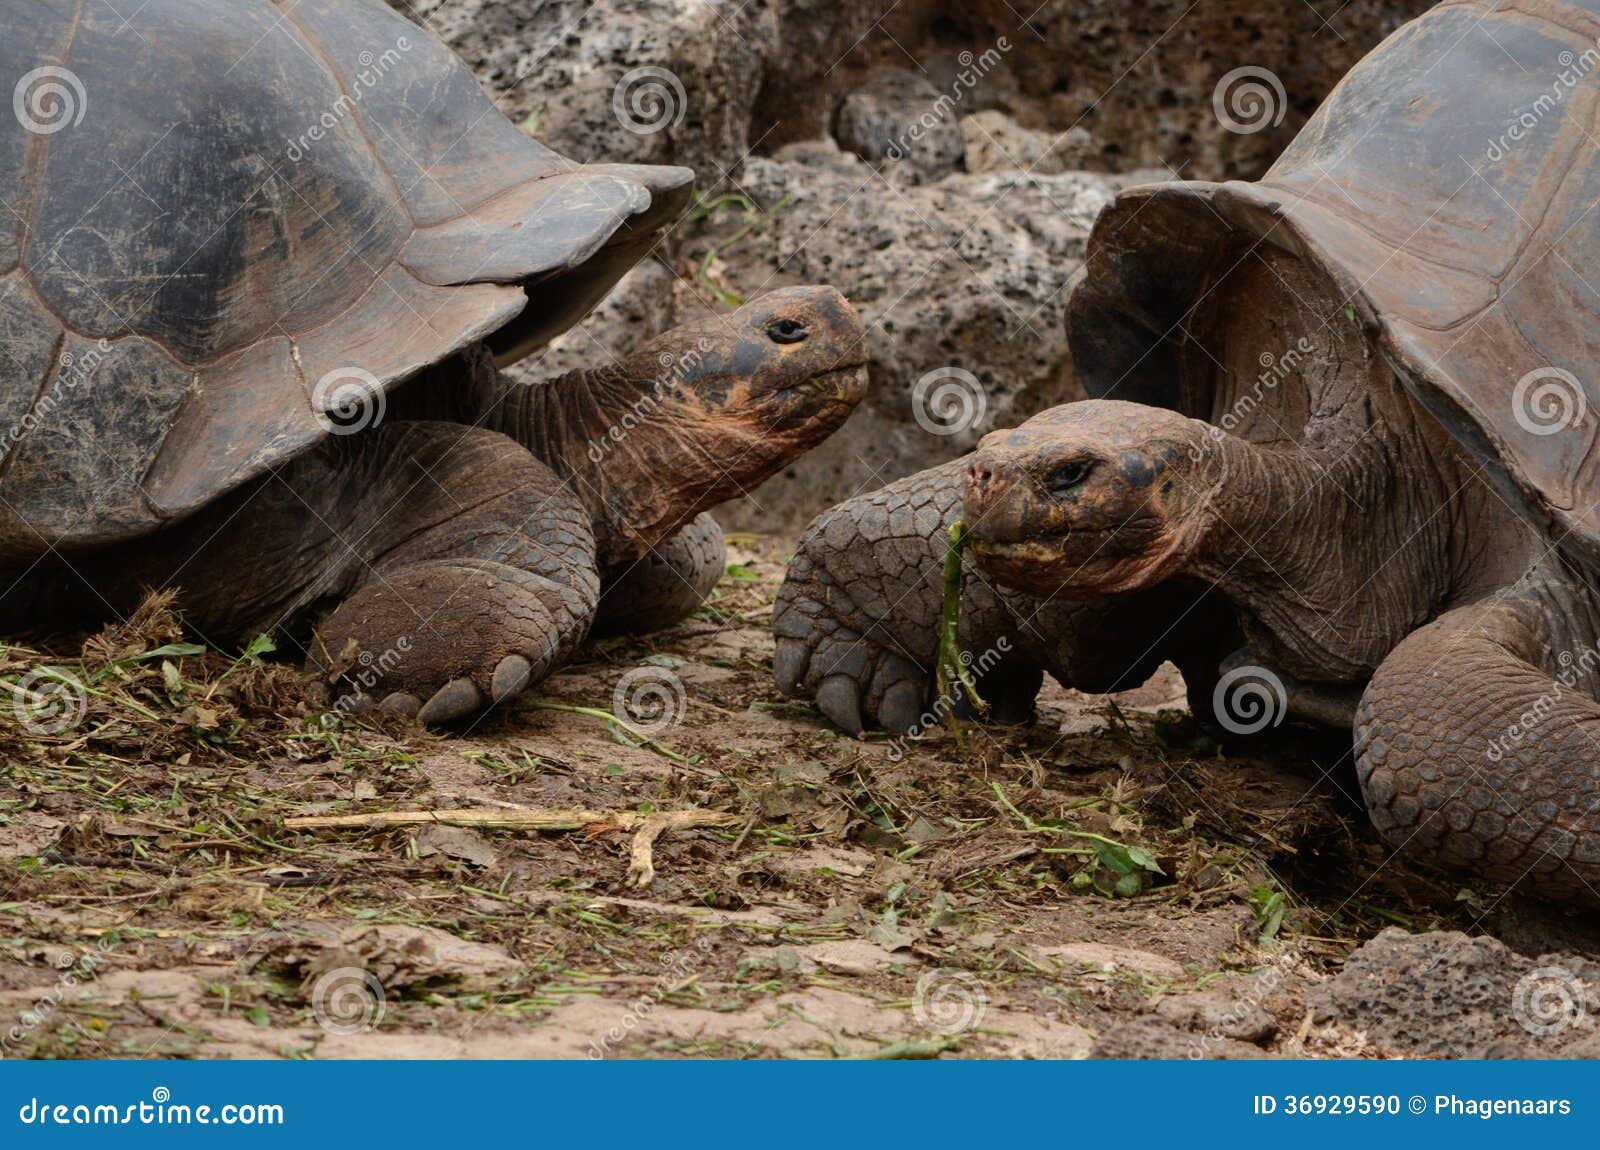 galapagos giant tortoise (chelonoidis nigra)